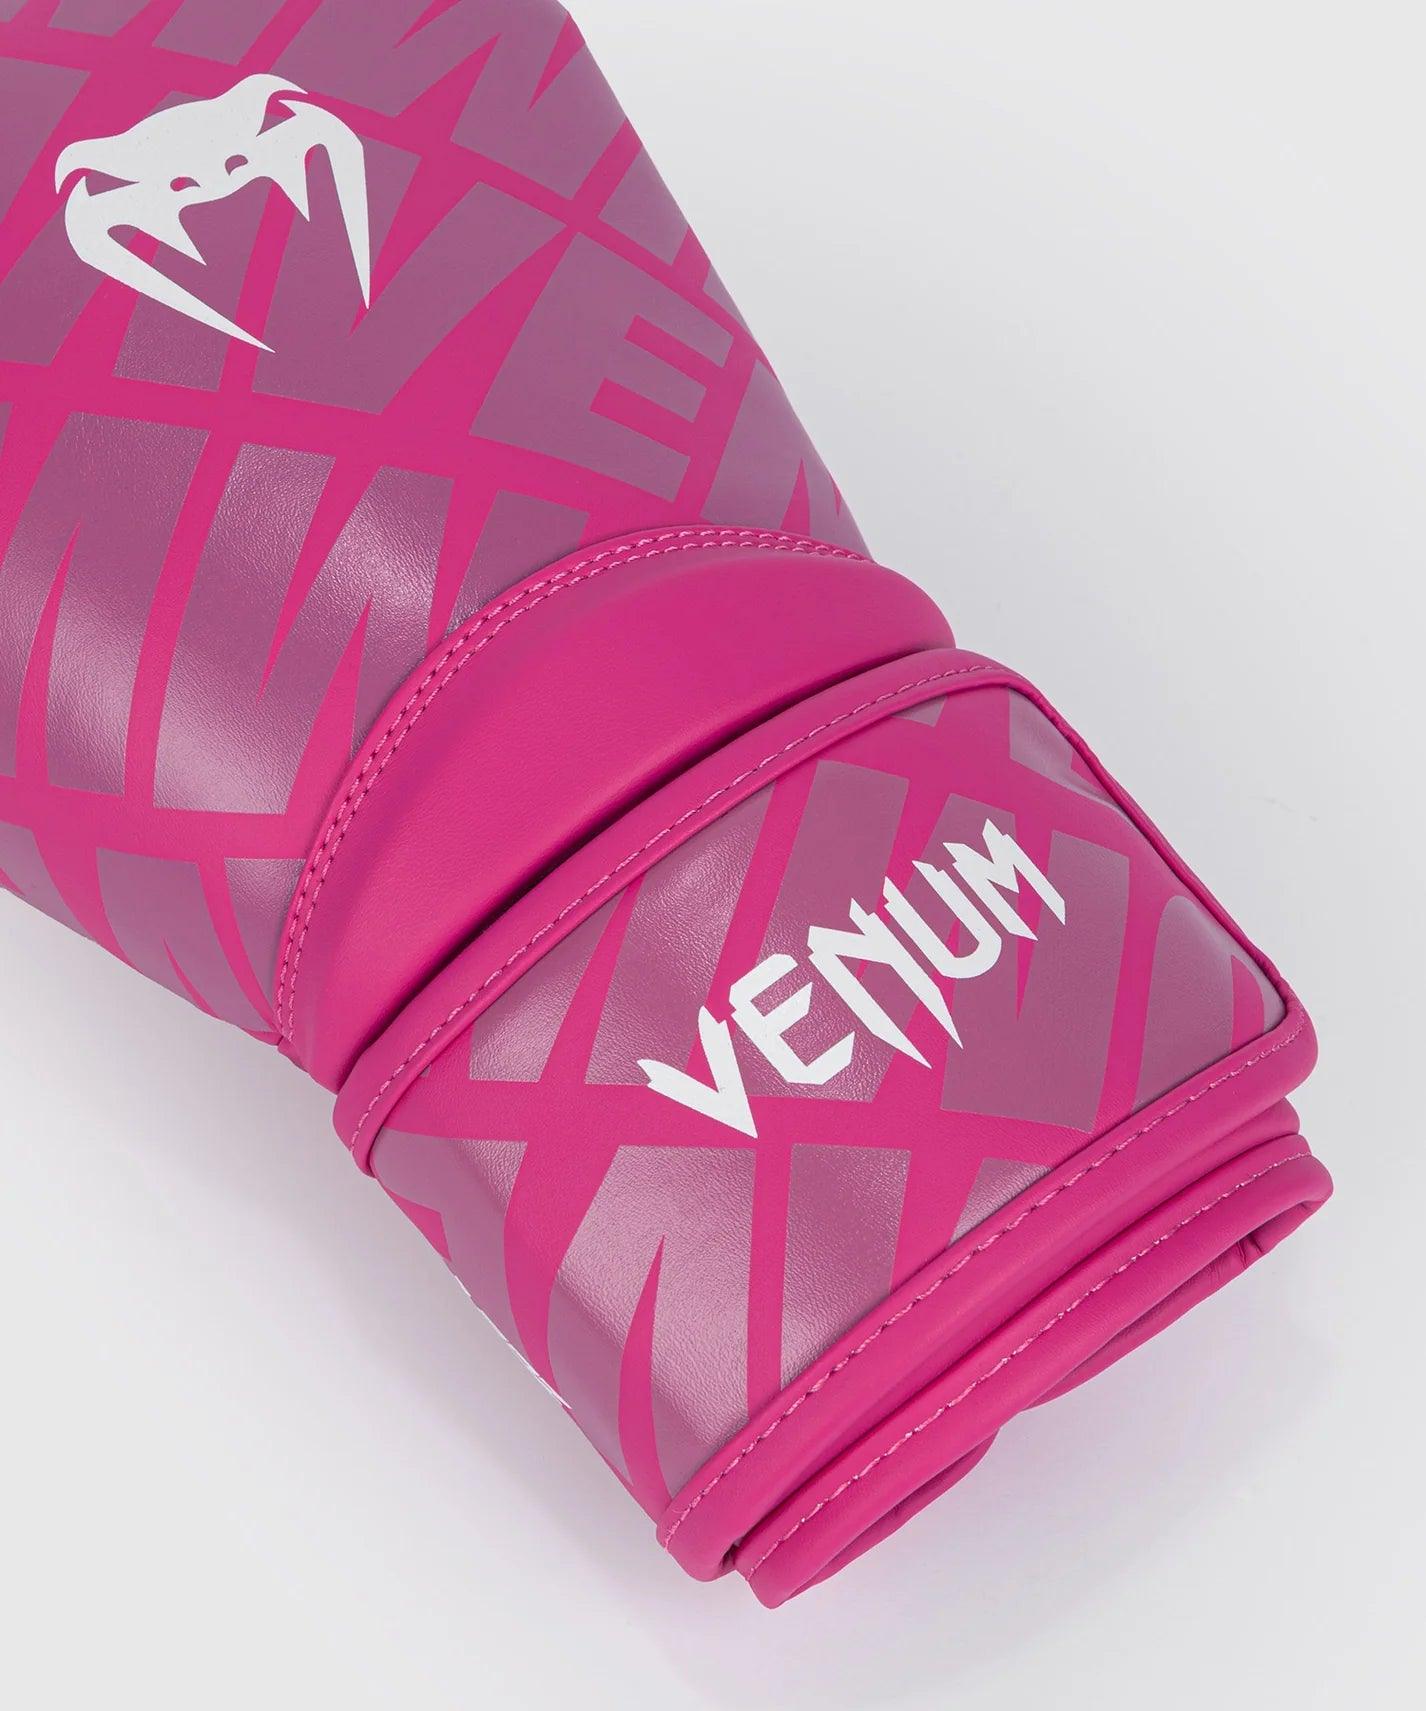 Venum Contender 1.5 XT Boxing Gloves - Rose/Blanc